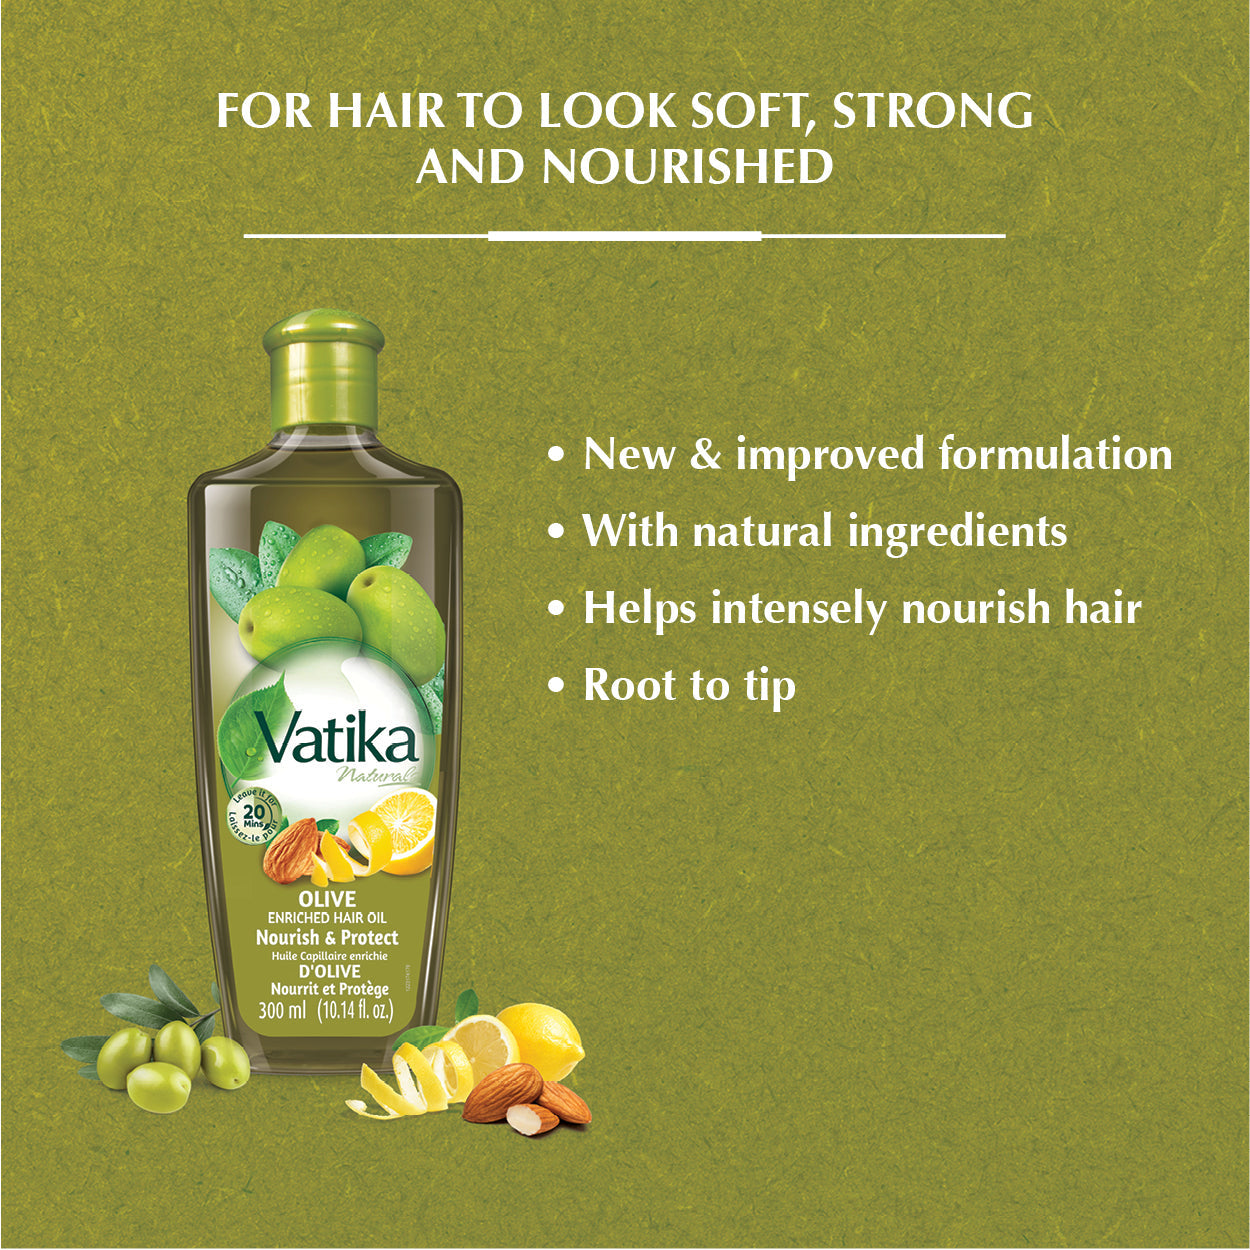 Vatika Naturals Olive Enriched Hair Oil